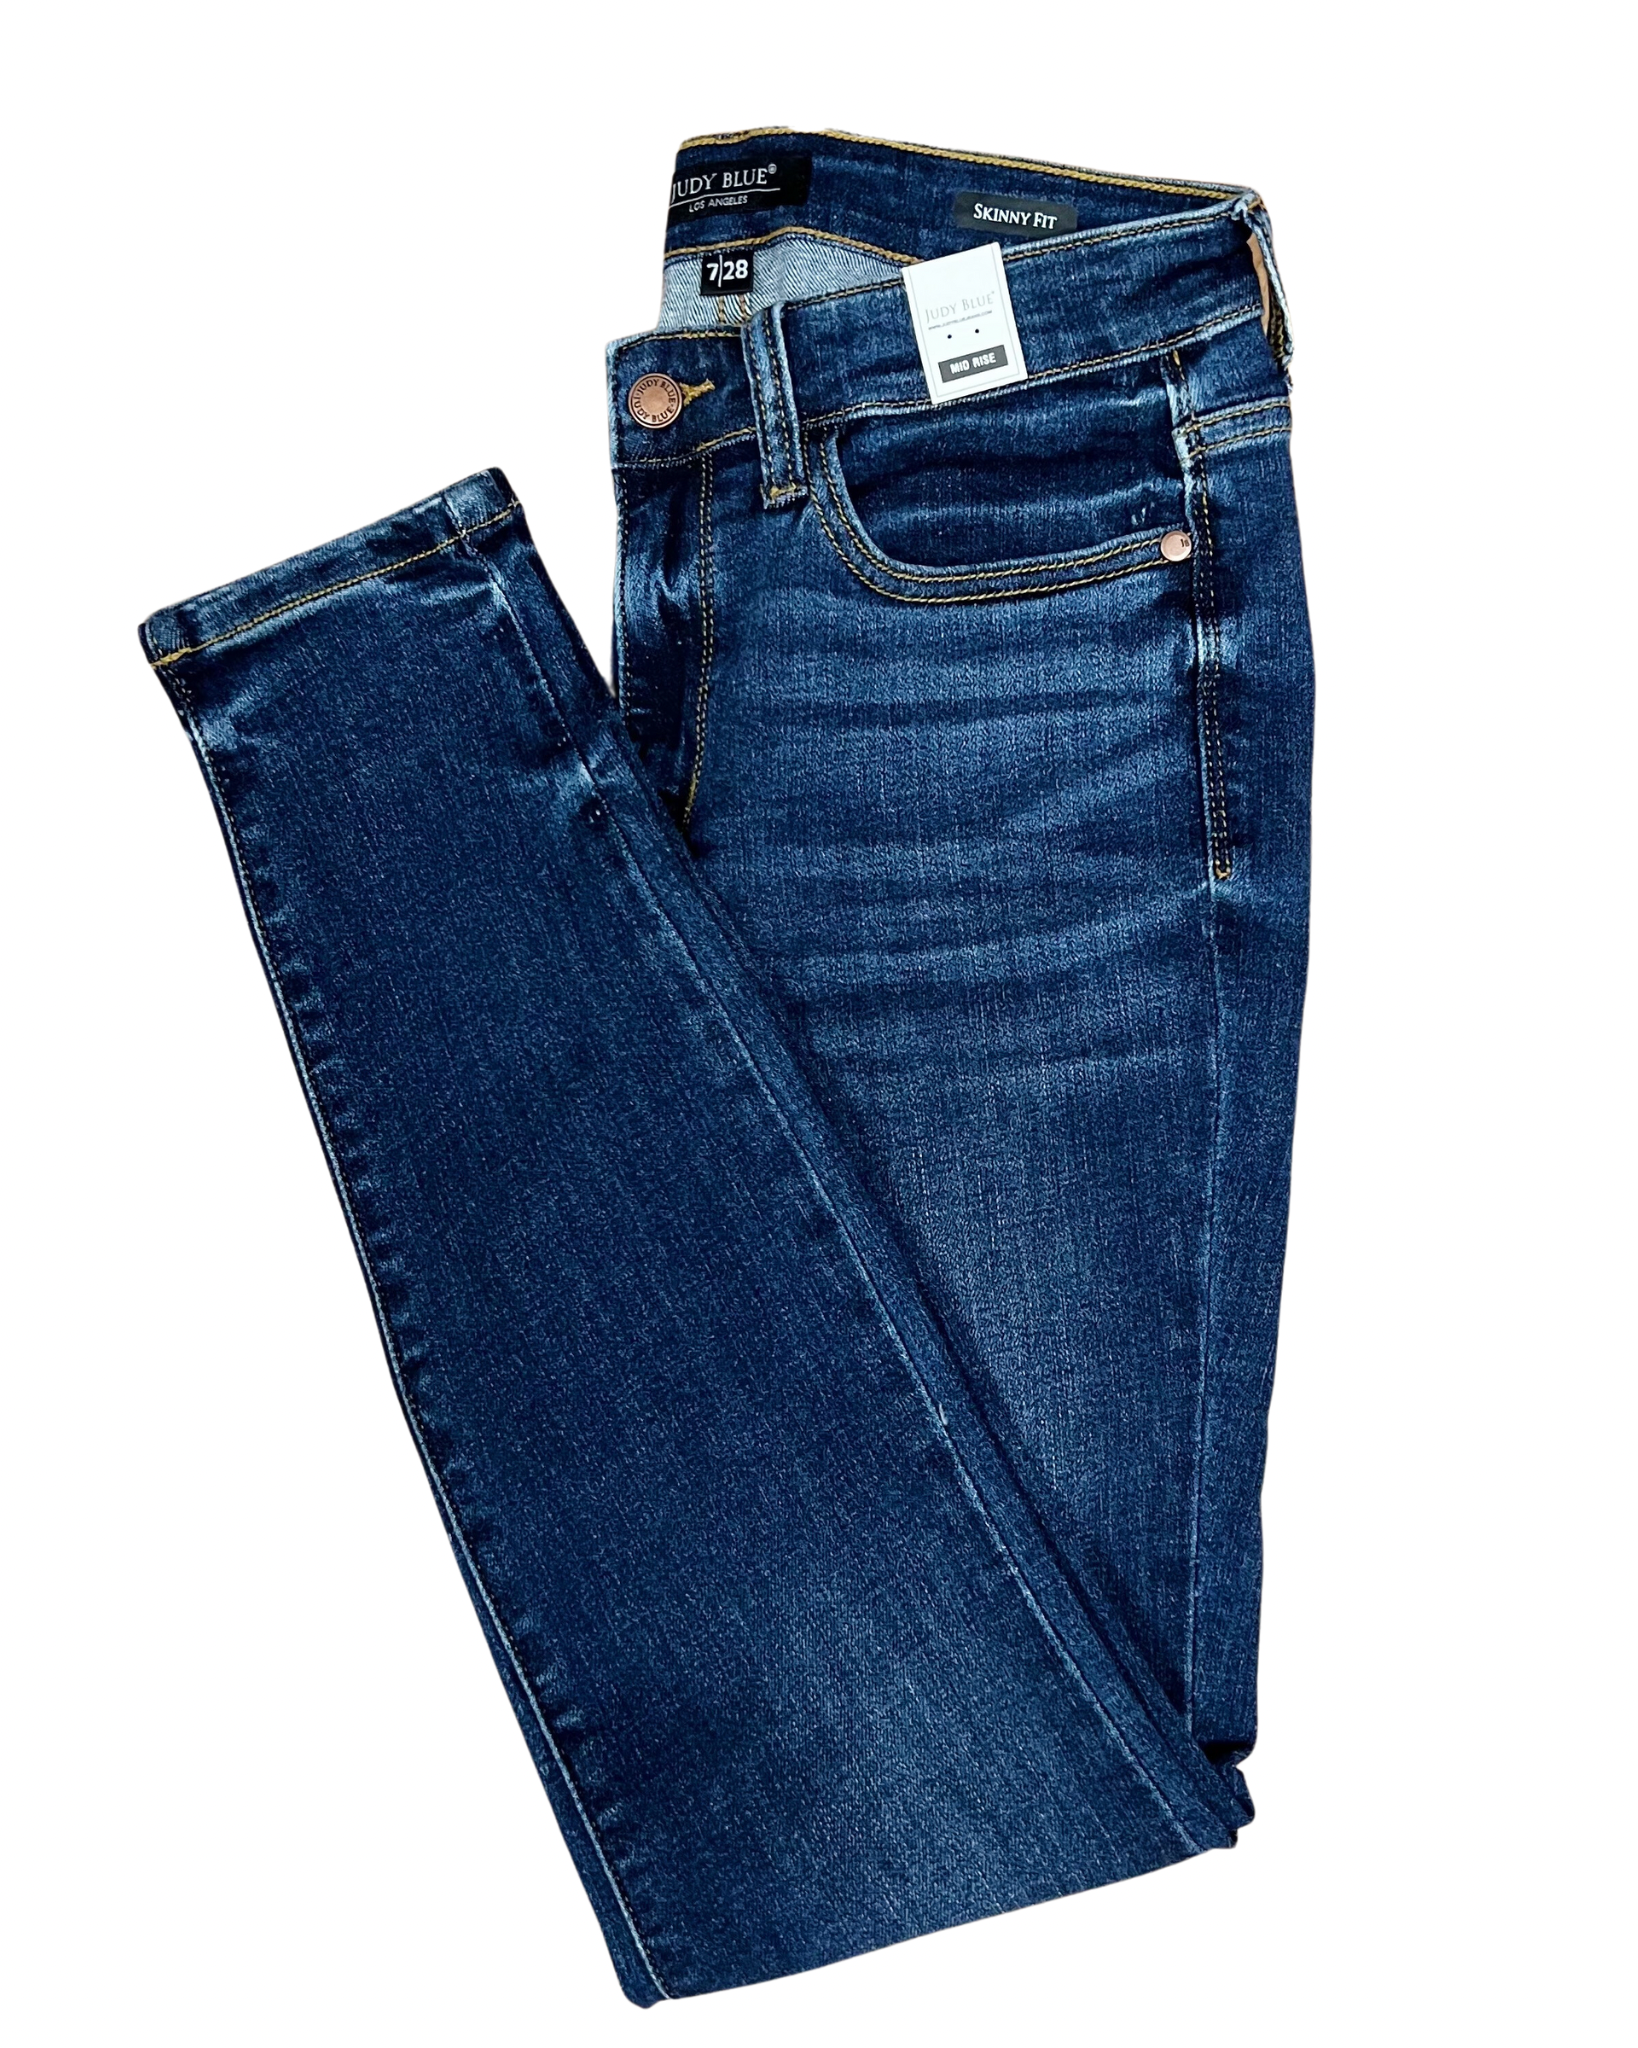 Judy Blue REG/CURVY Handsand Skinny Jeans FINAL SALE - Madi Savvy